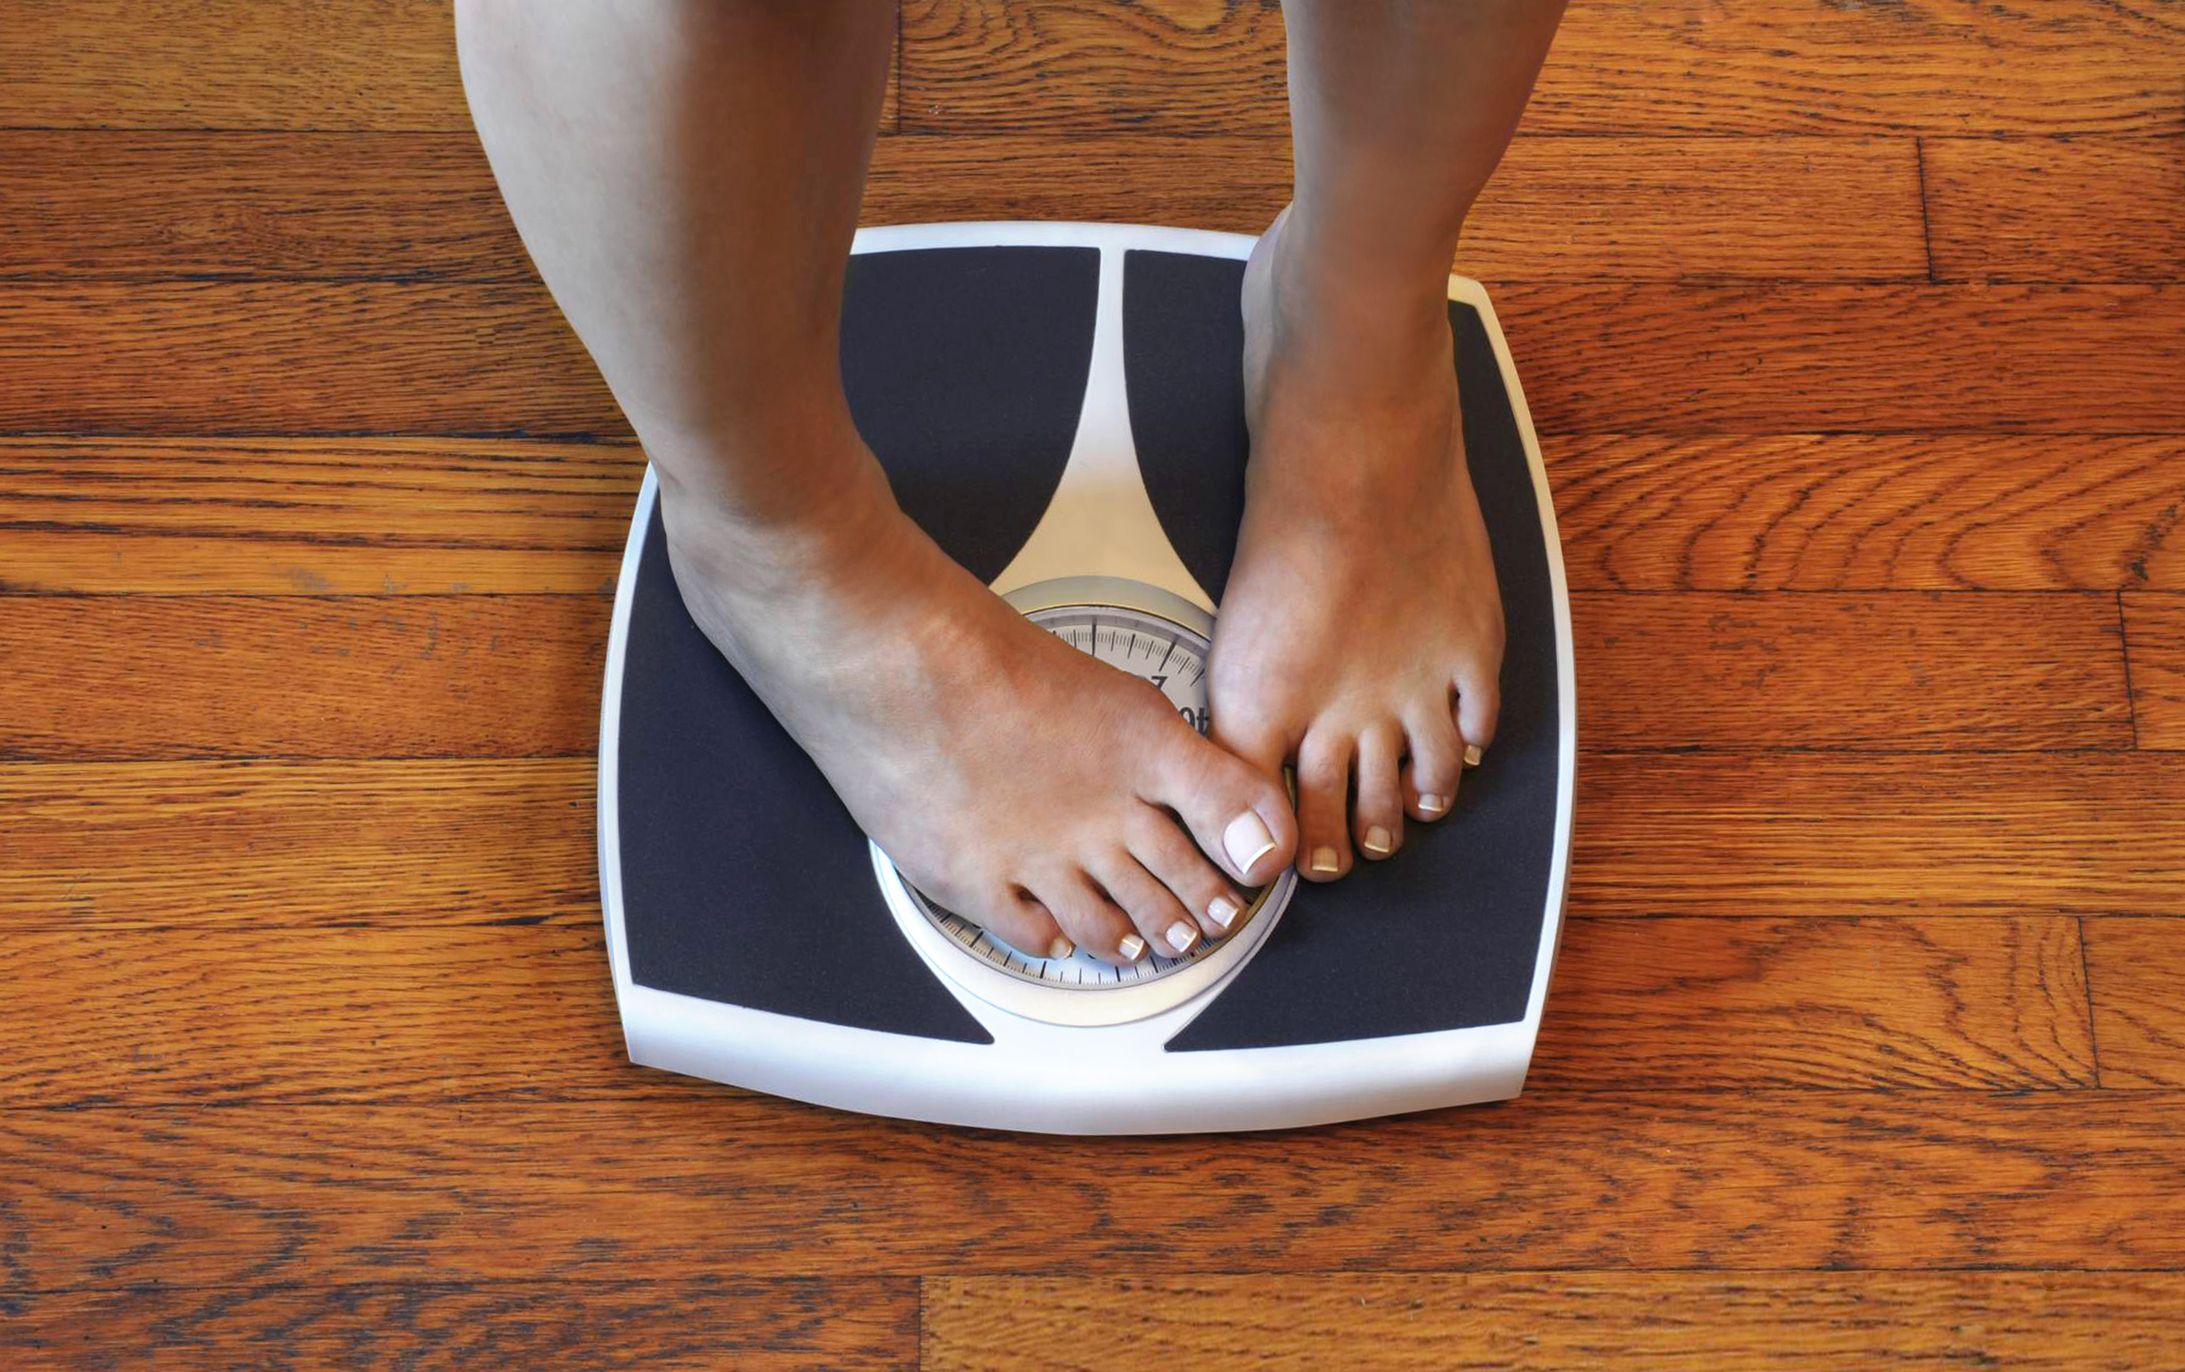 Cambridge Diet: 1:1 Diet weight loss plan explained